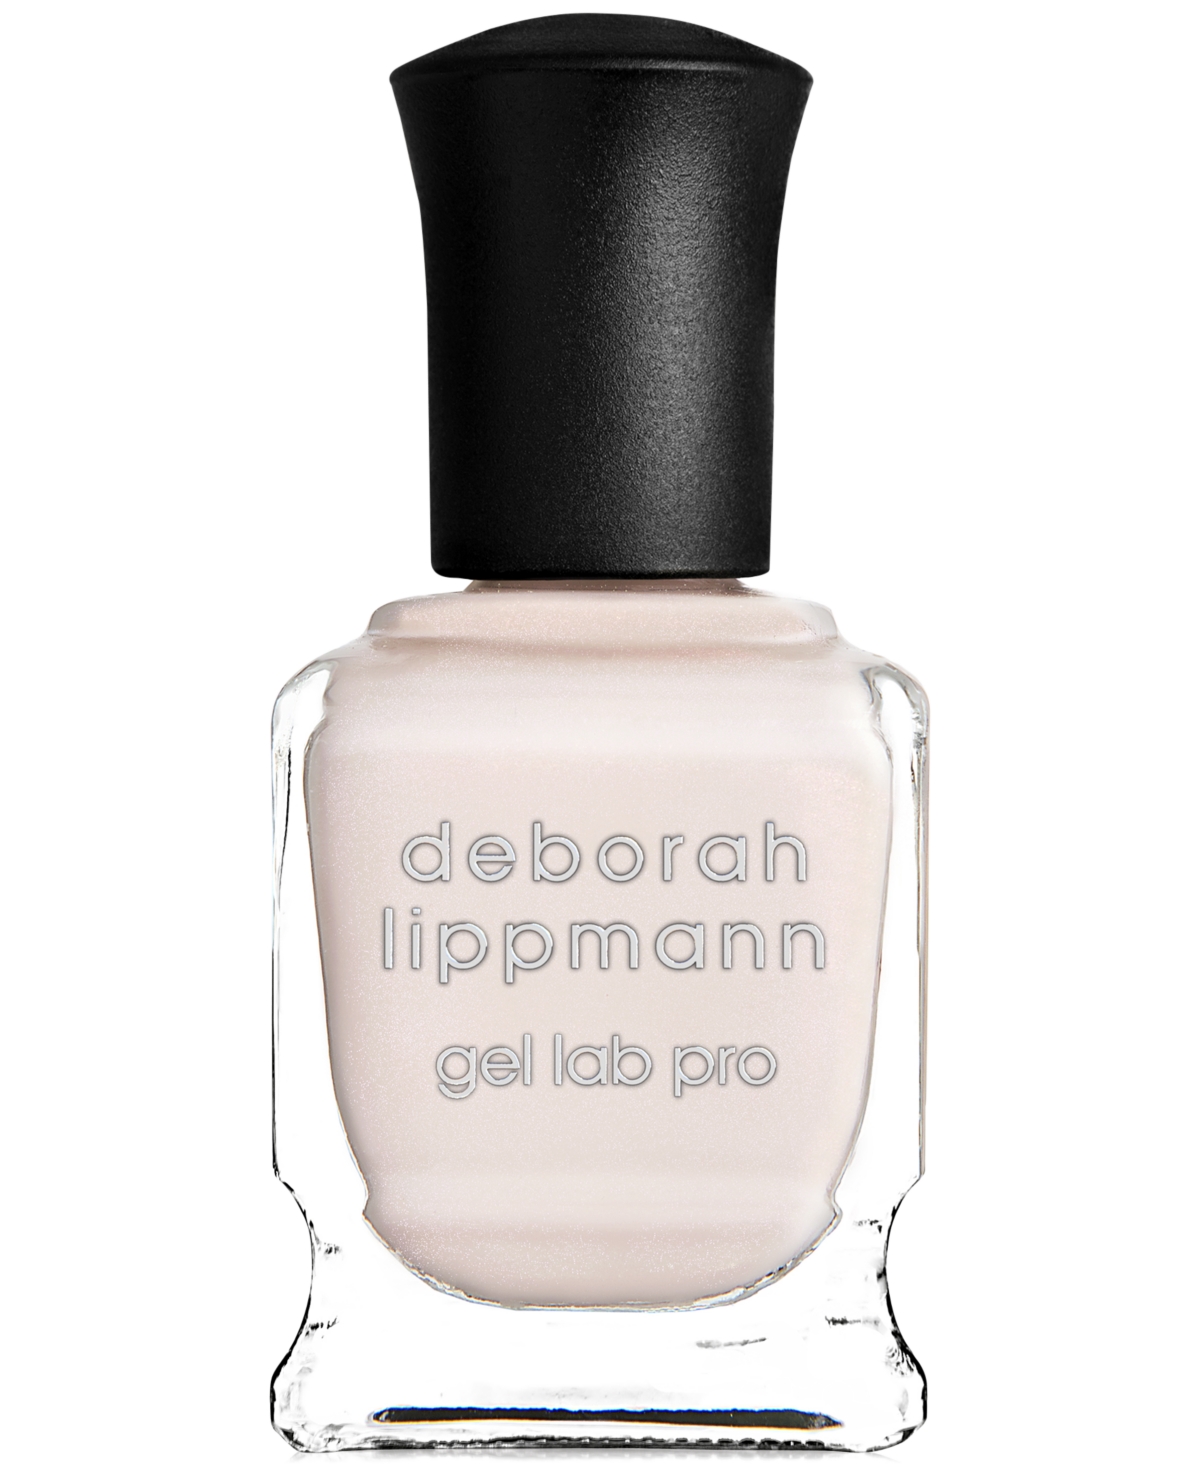 Deborah Lippmann Gel Lab Pro Nail Polish